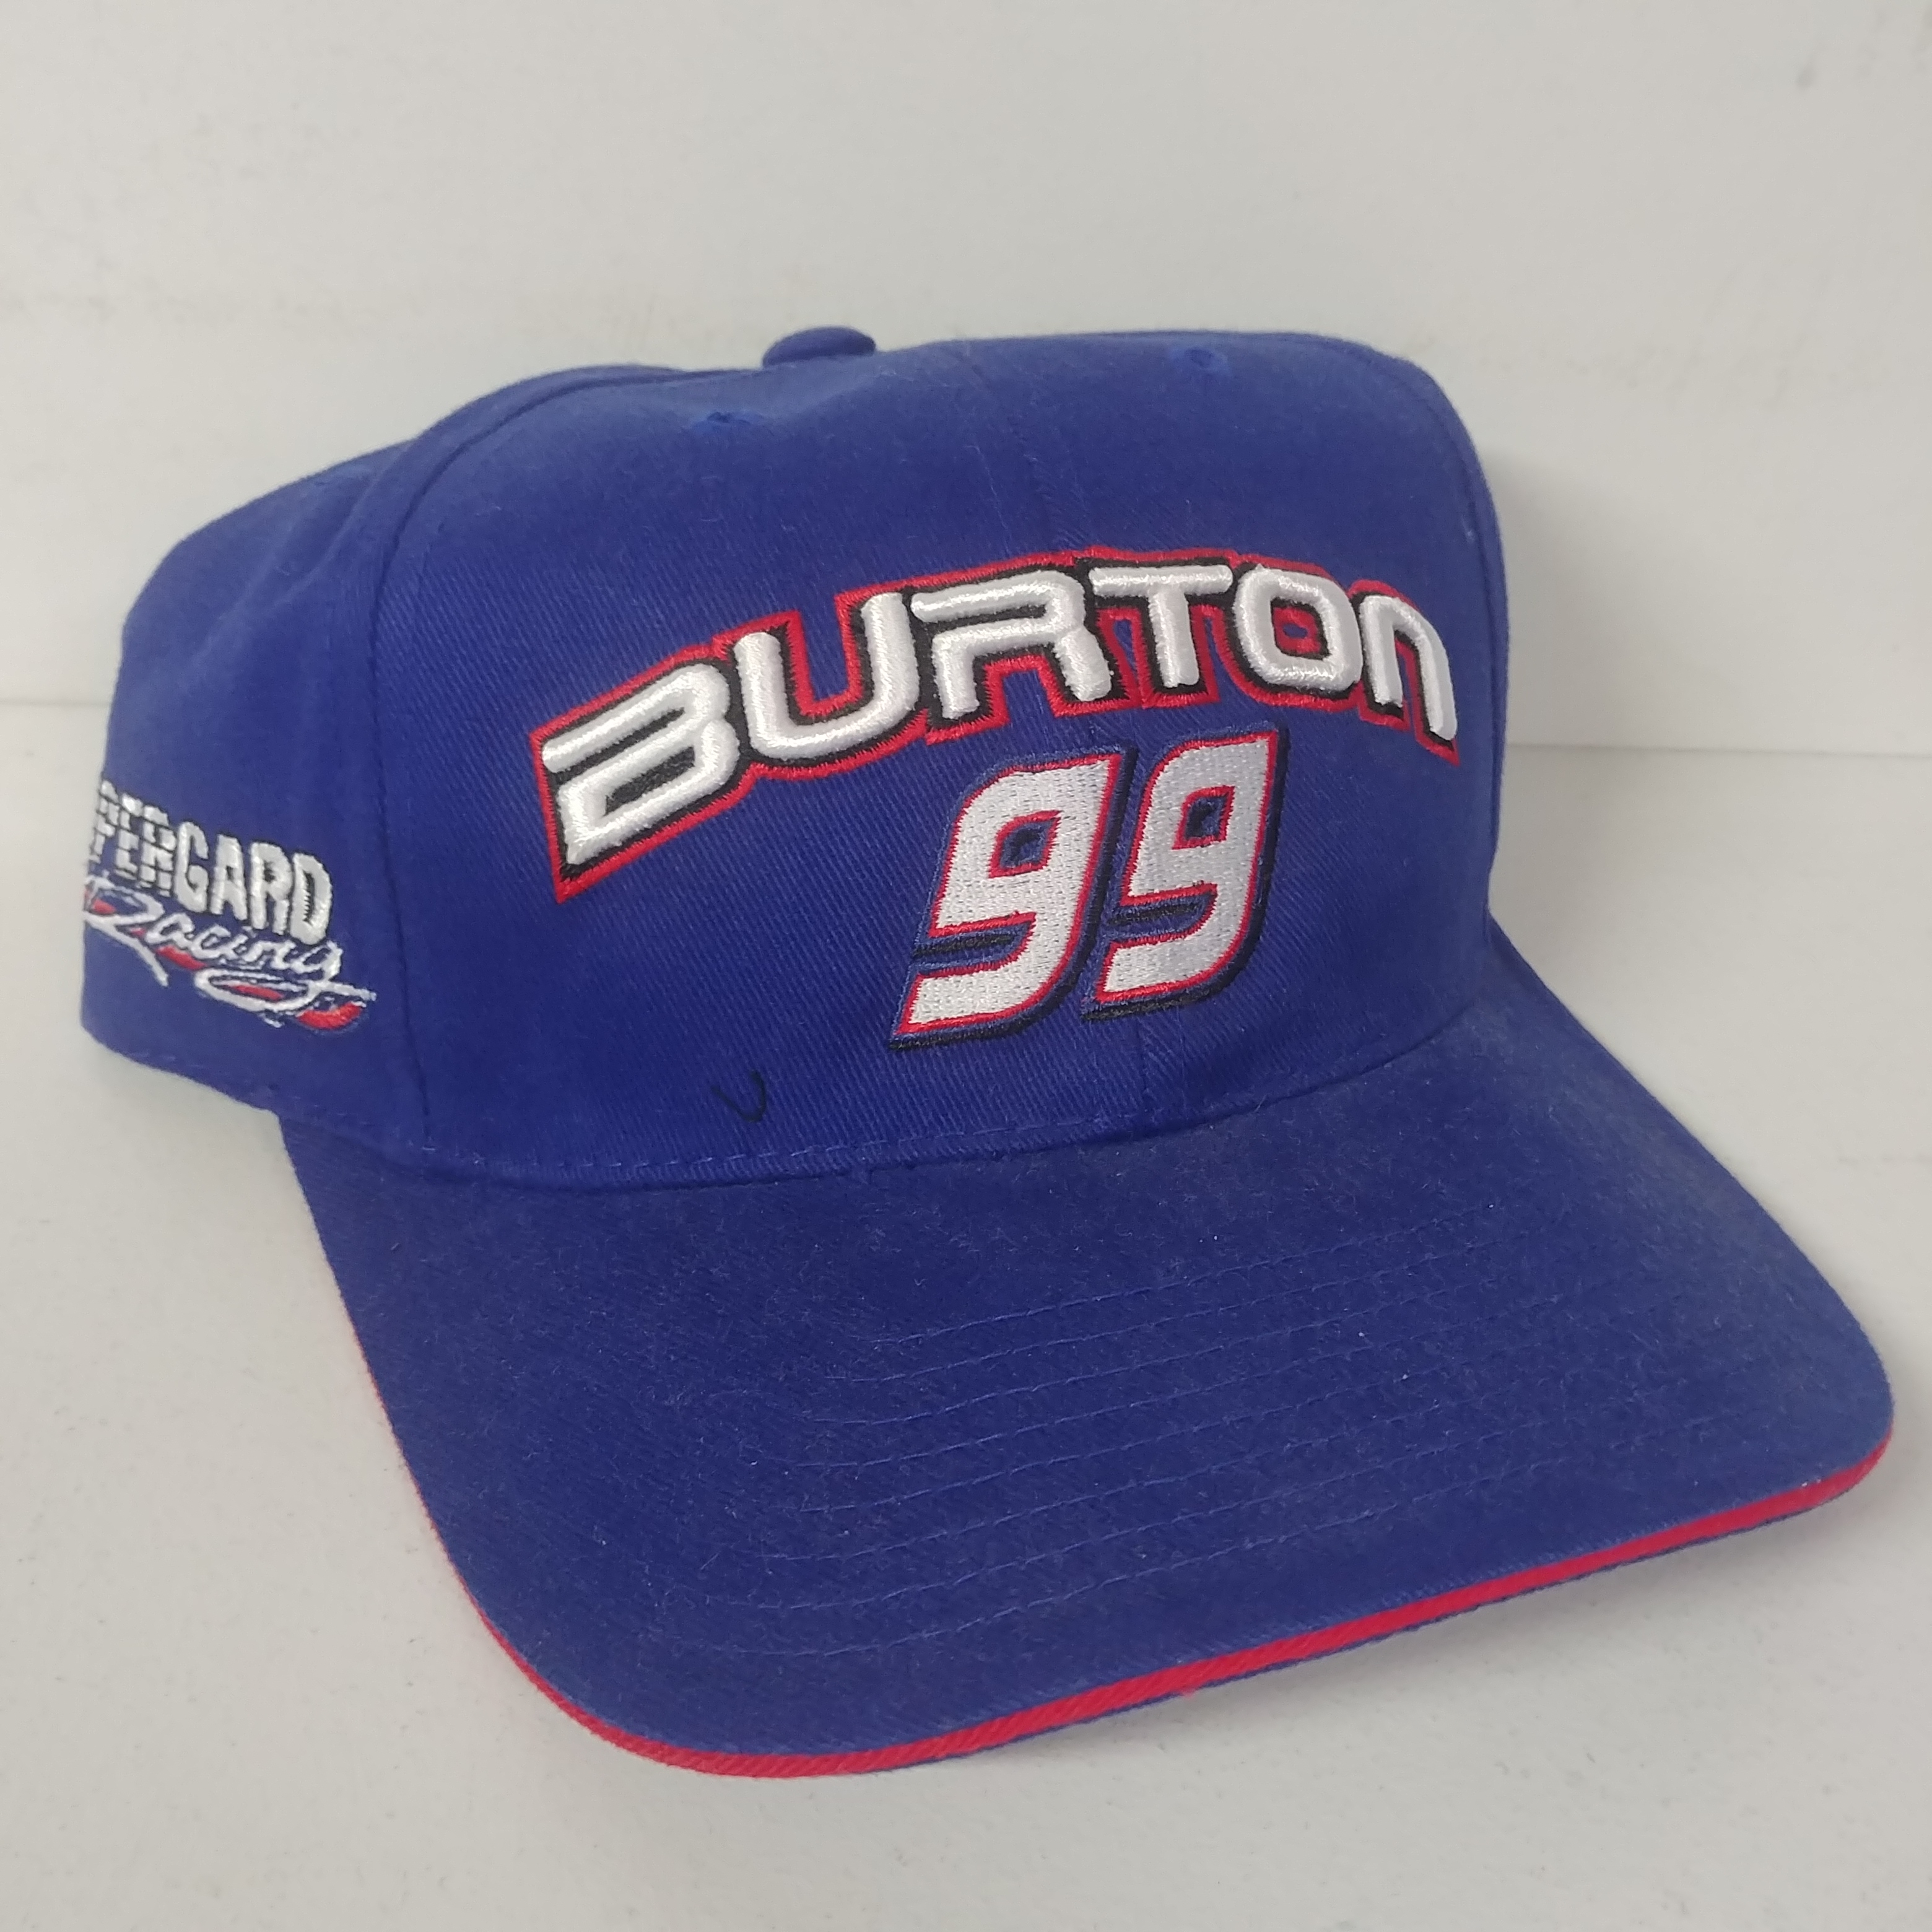 2001 Jeff Burton Citgo "Burton 99""Supergard Racing" cap